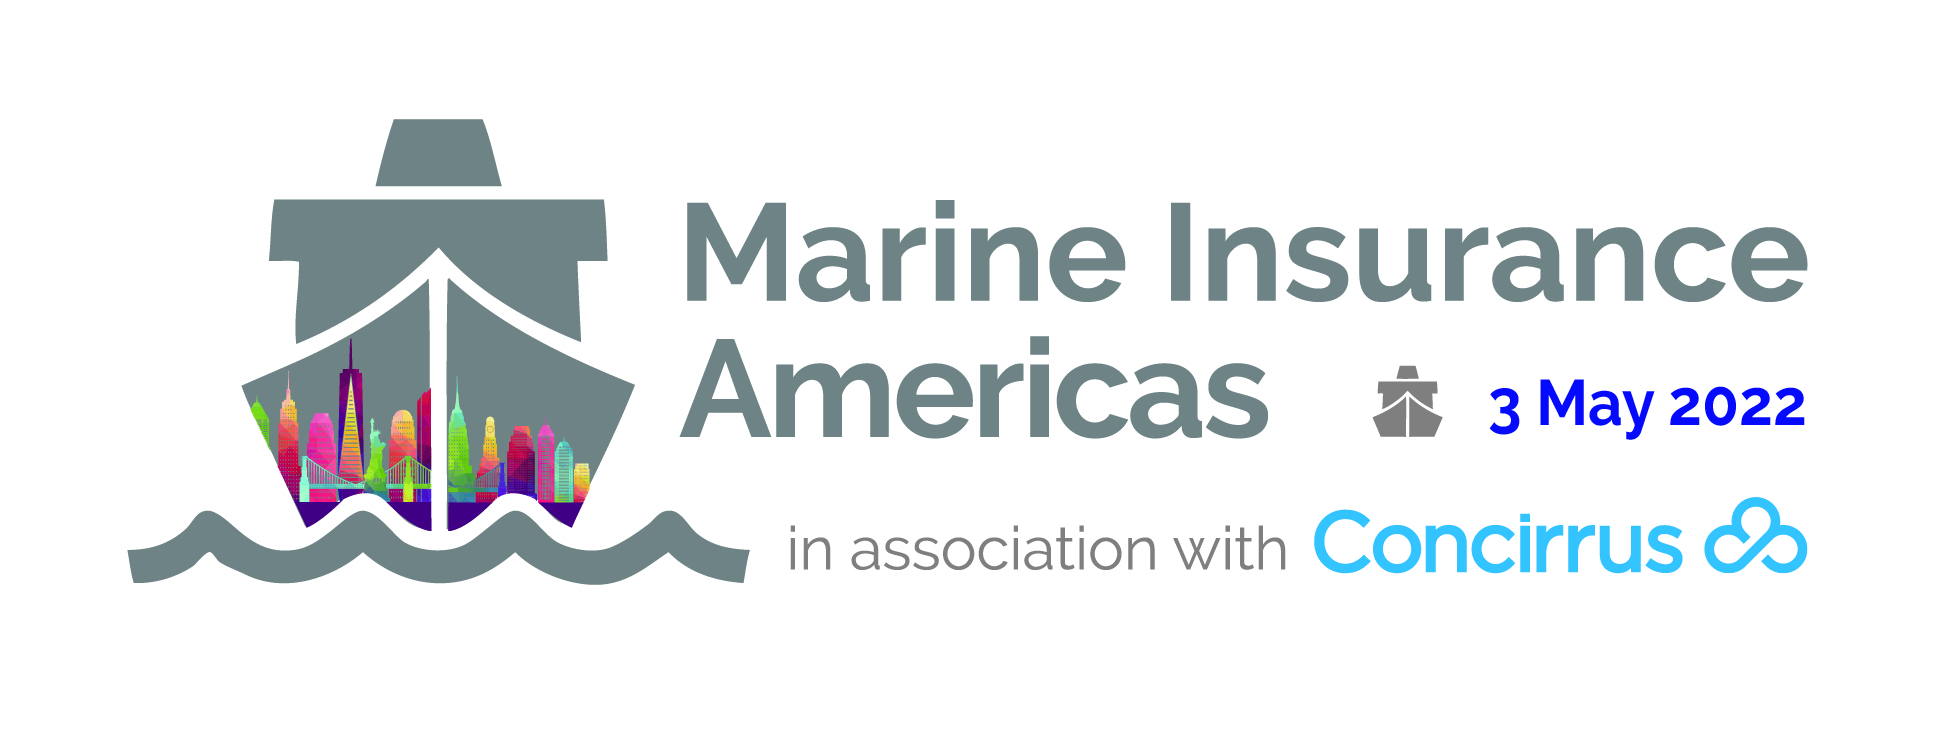 Marine Insurance Americas